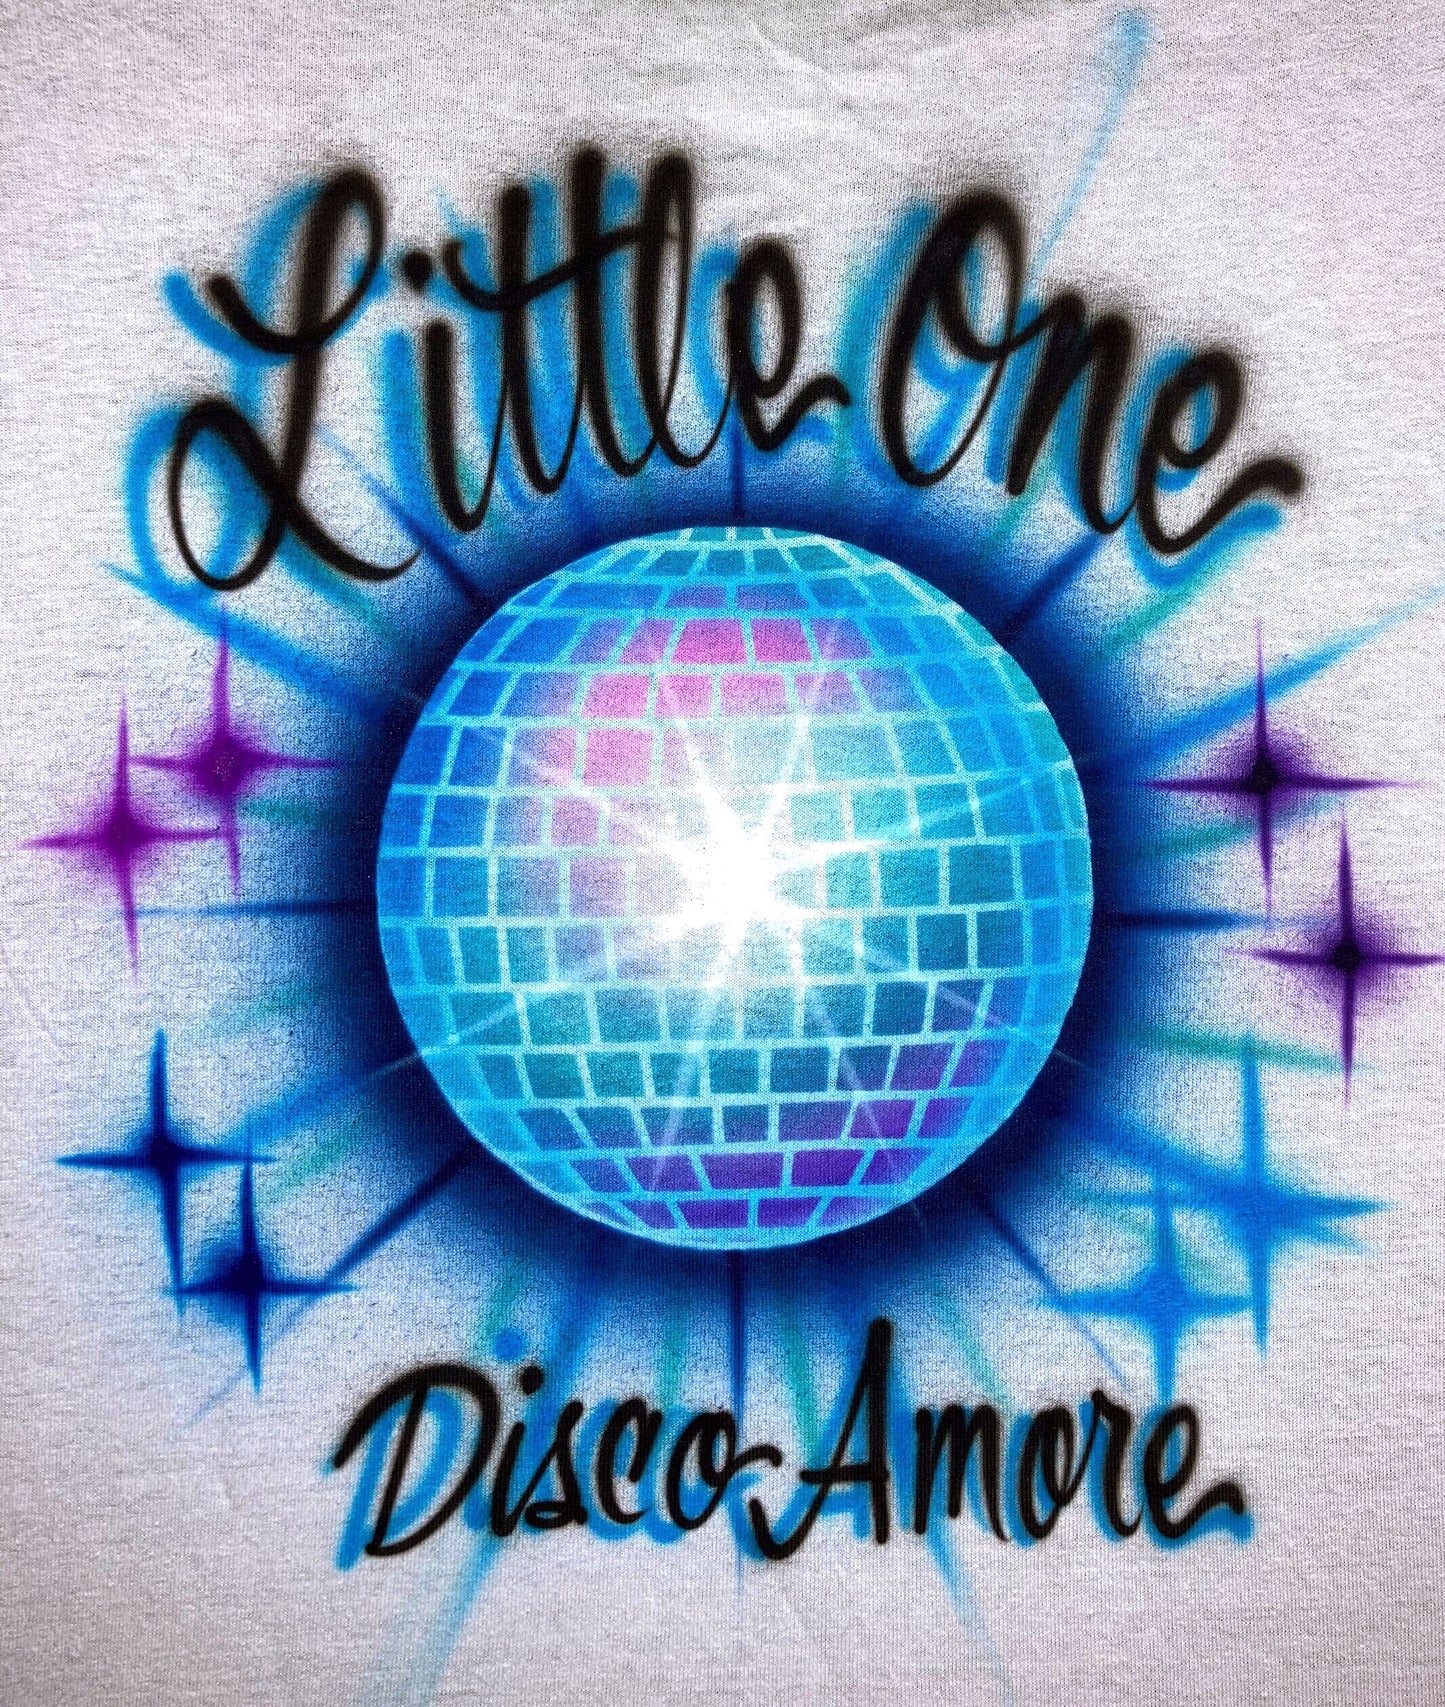 Airbrush T-shirt  - Disco - Music - Dance - Party